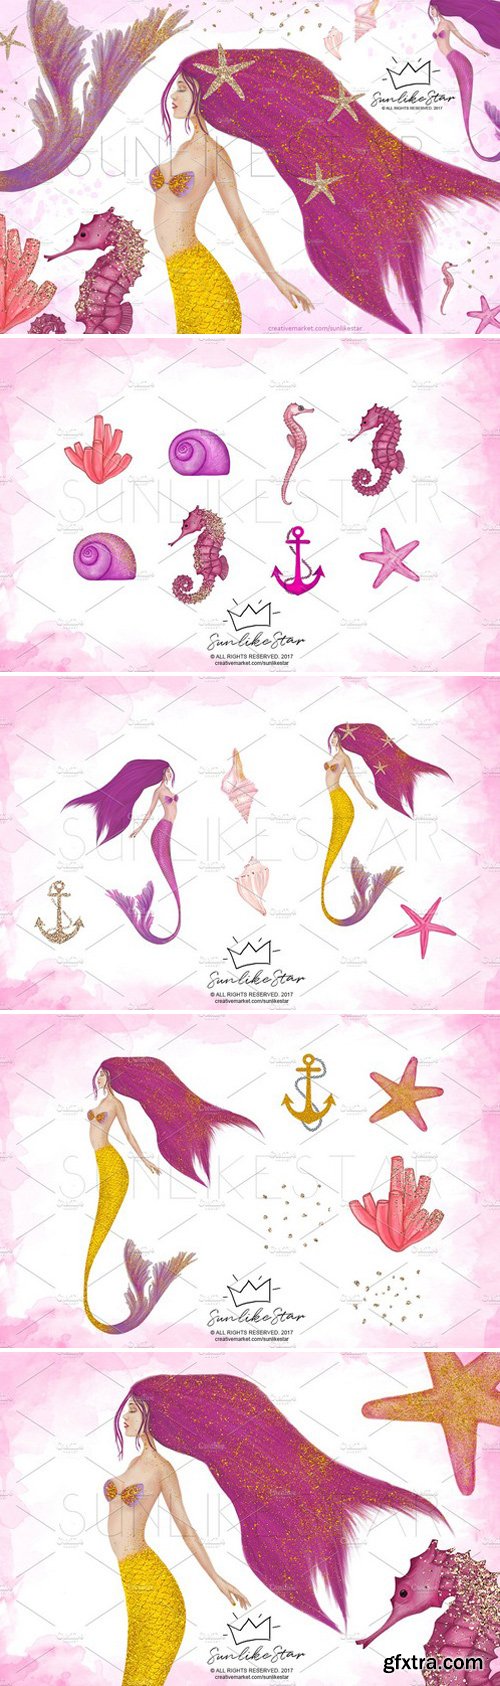 CM - Mermaid Illustration Clip Art Pack 2055607